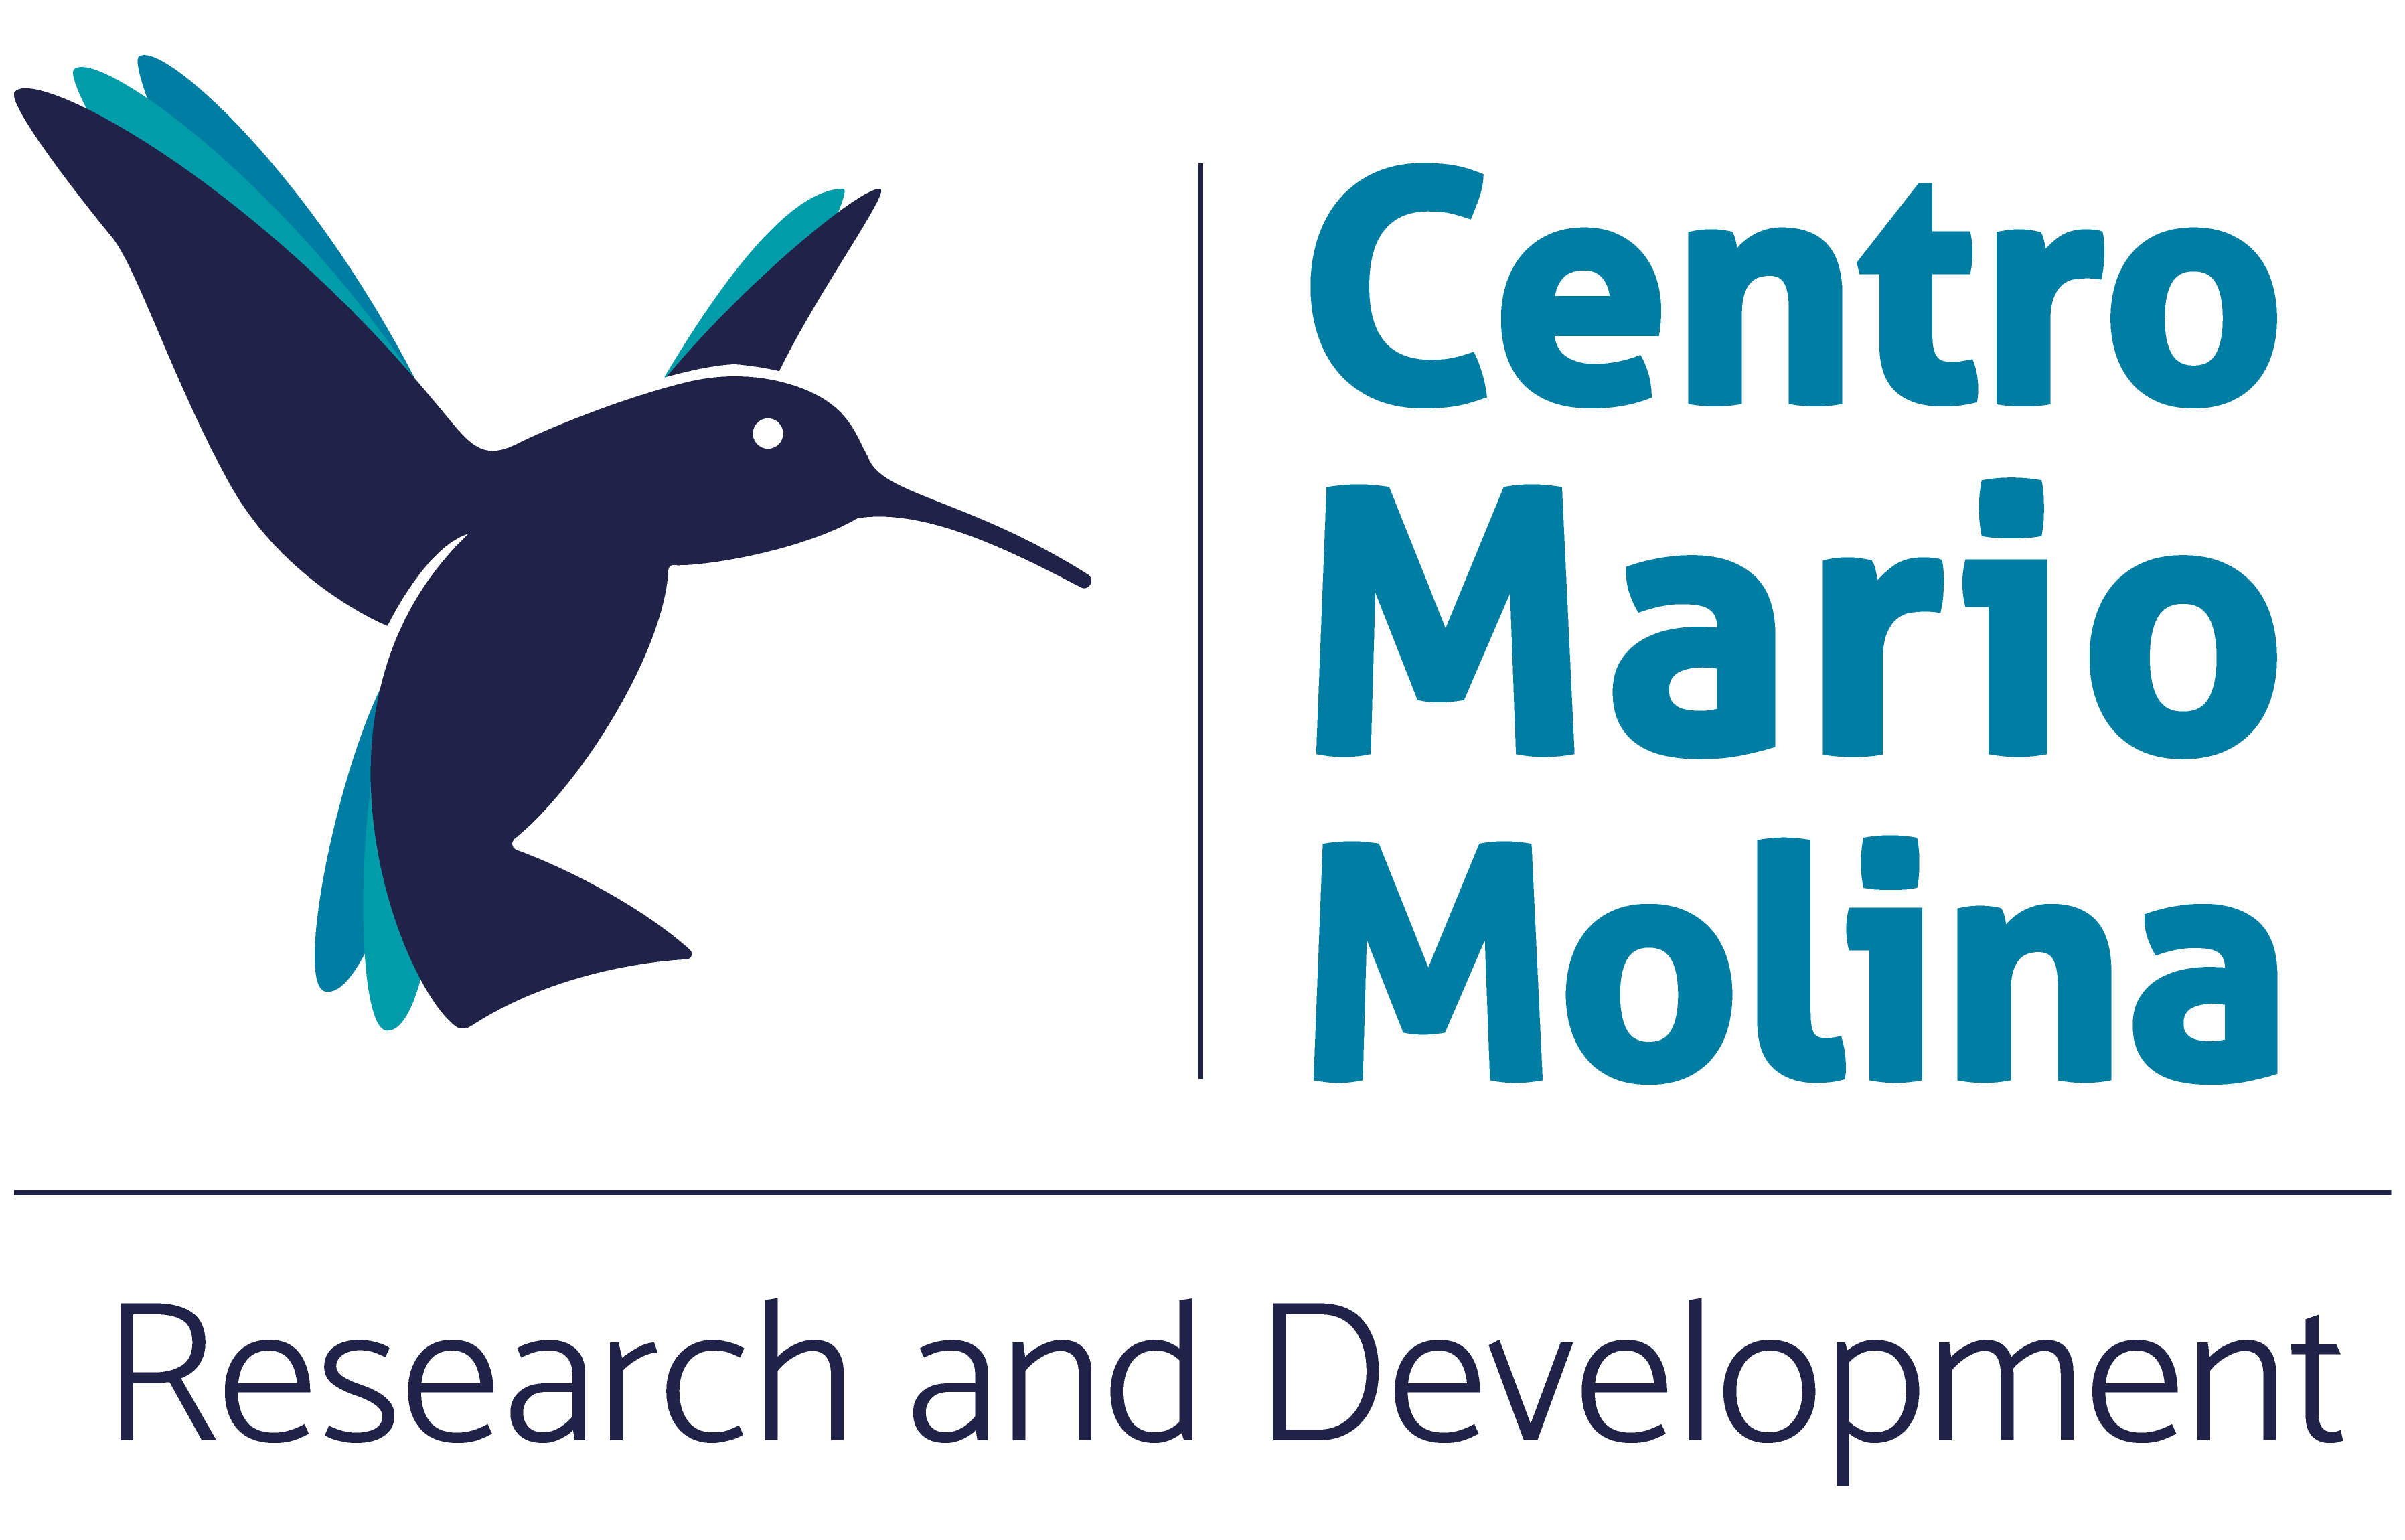 Centro Premio Nobel Mario Molina logo